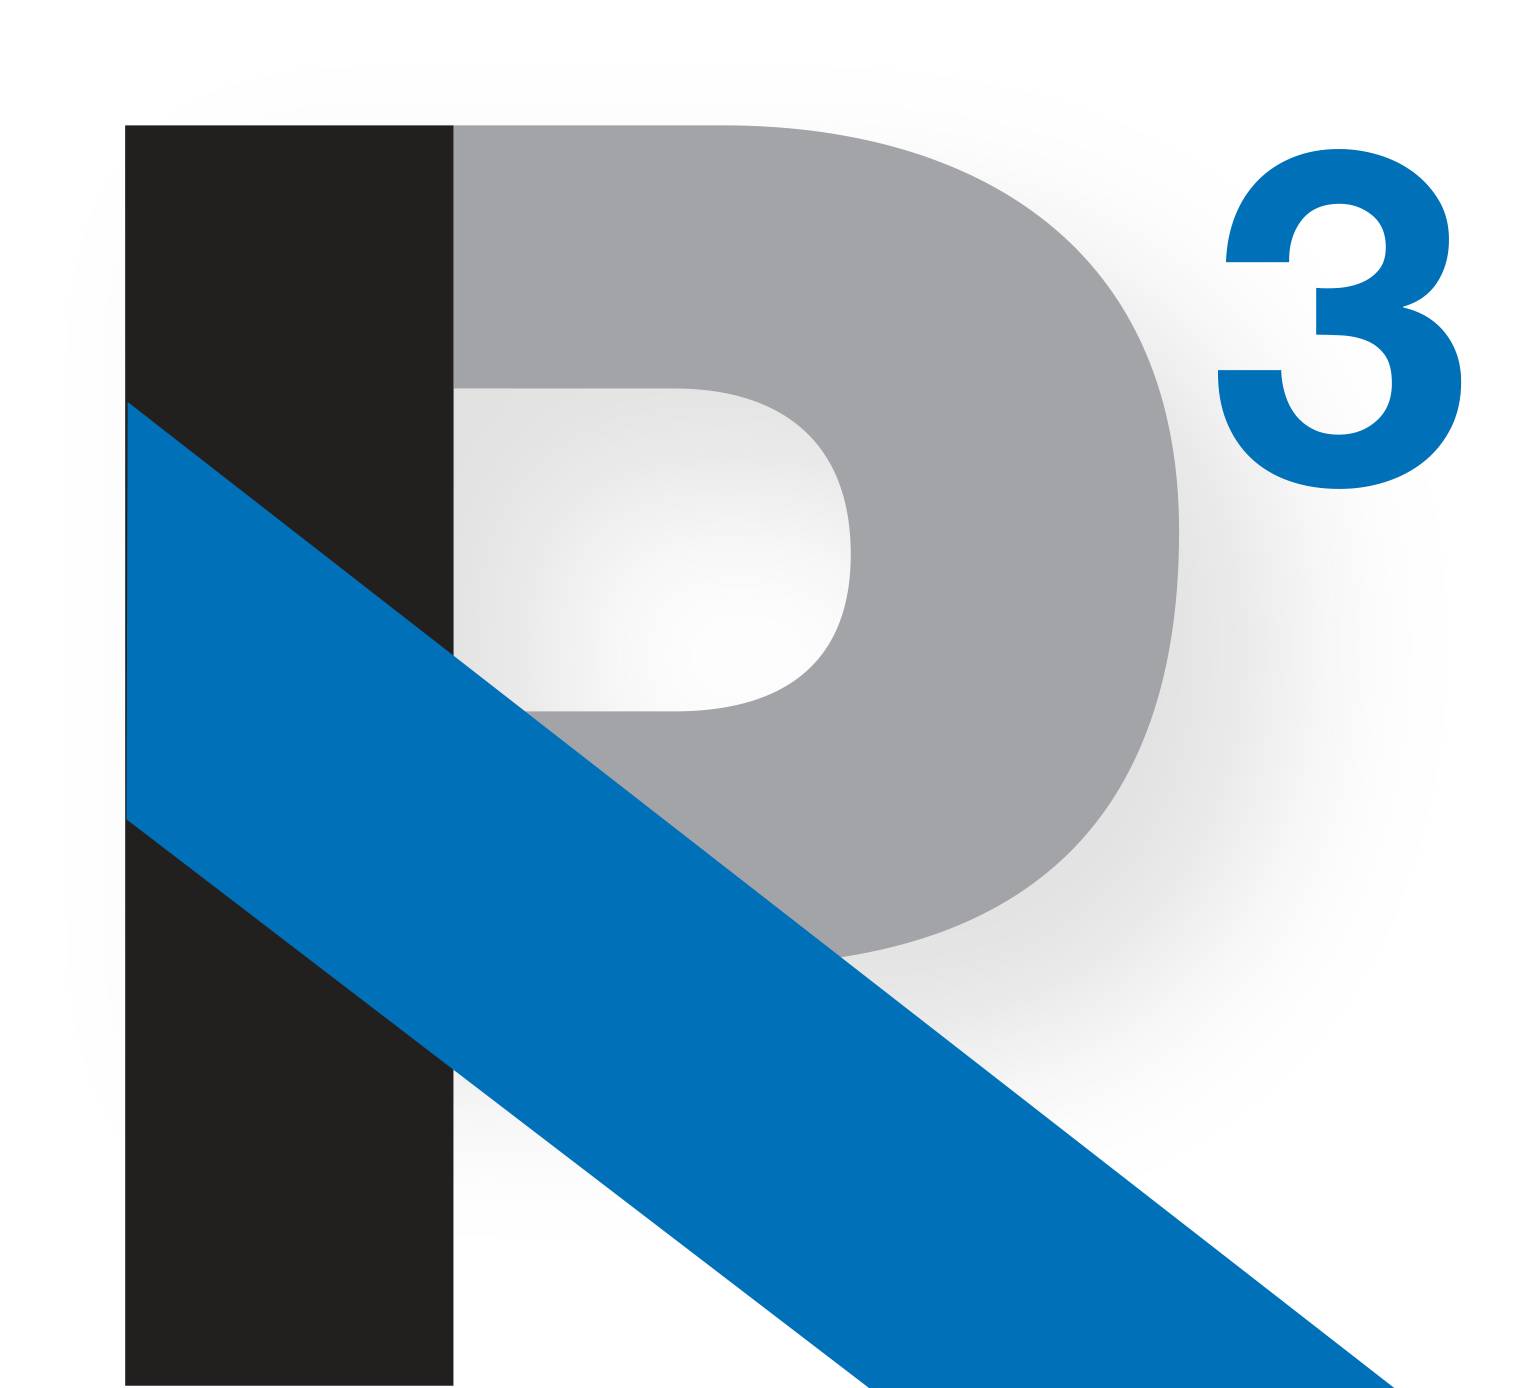 r3 logo b